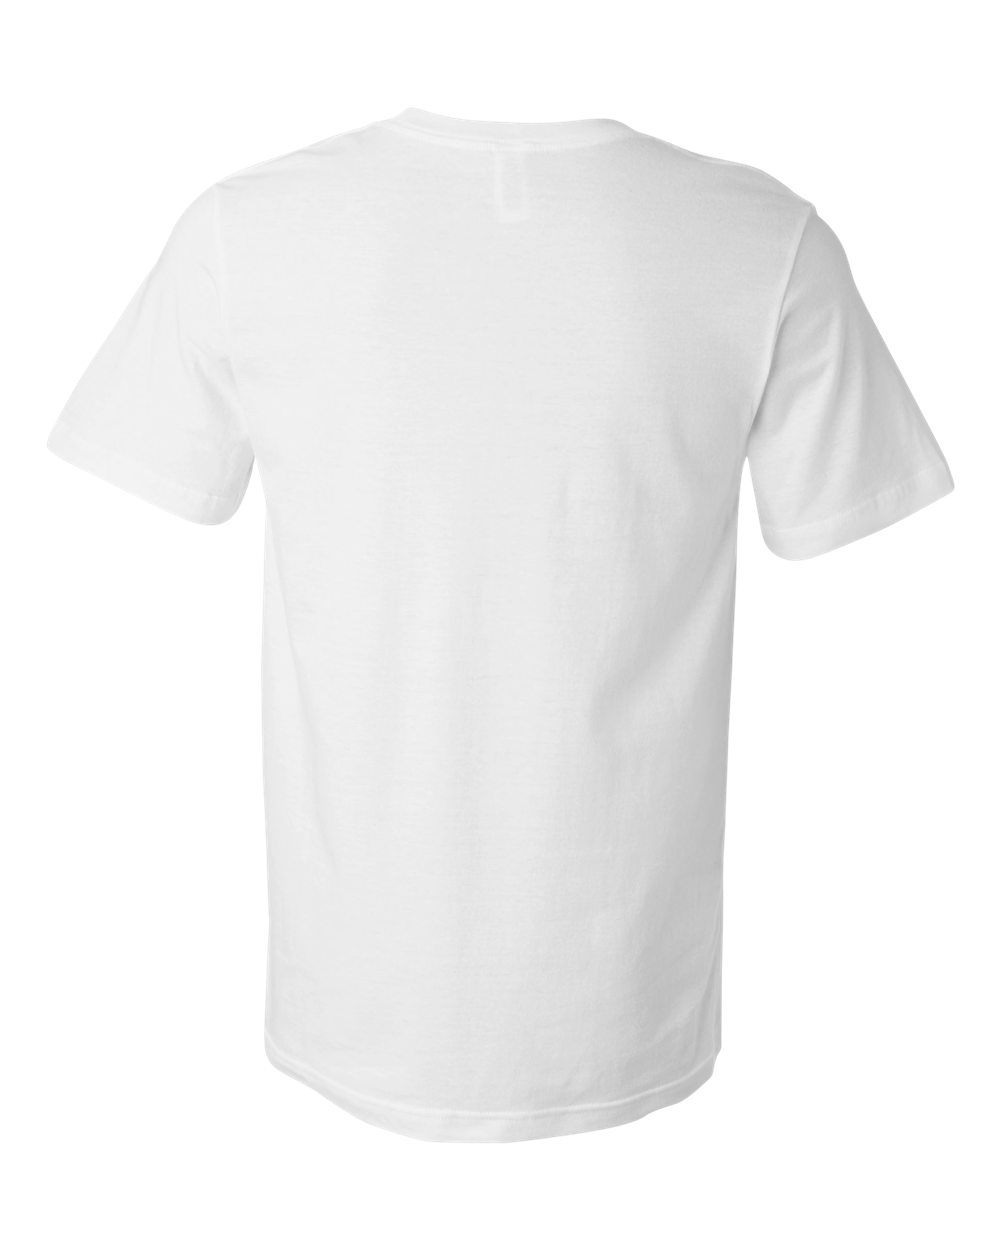 BELLA + CANVAS Mens Blank Jersey Pocket Contrast Tee T Shirt 3021 up to 2XL | eBay